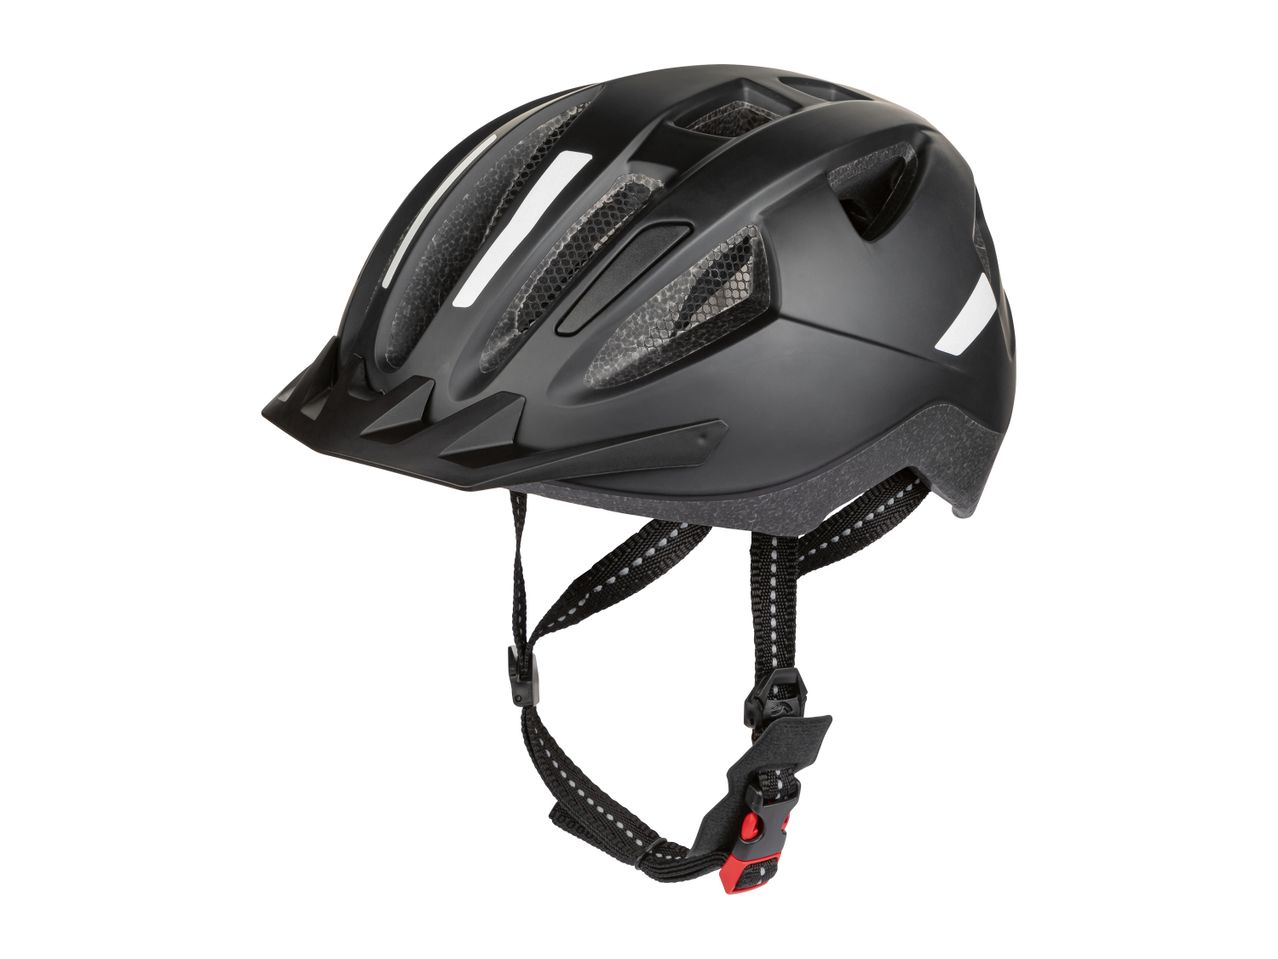 Go to full screen view: Crivit Bike Helmet with Rear Light - Image 1